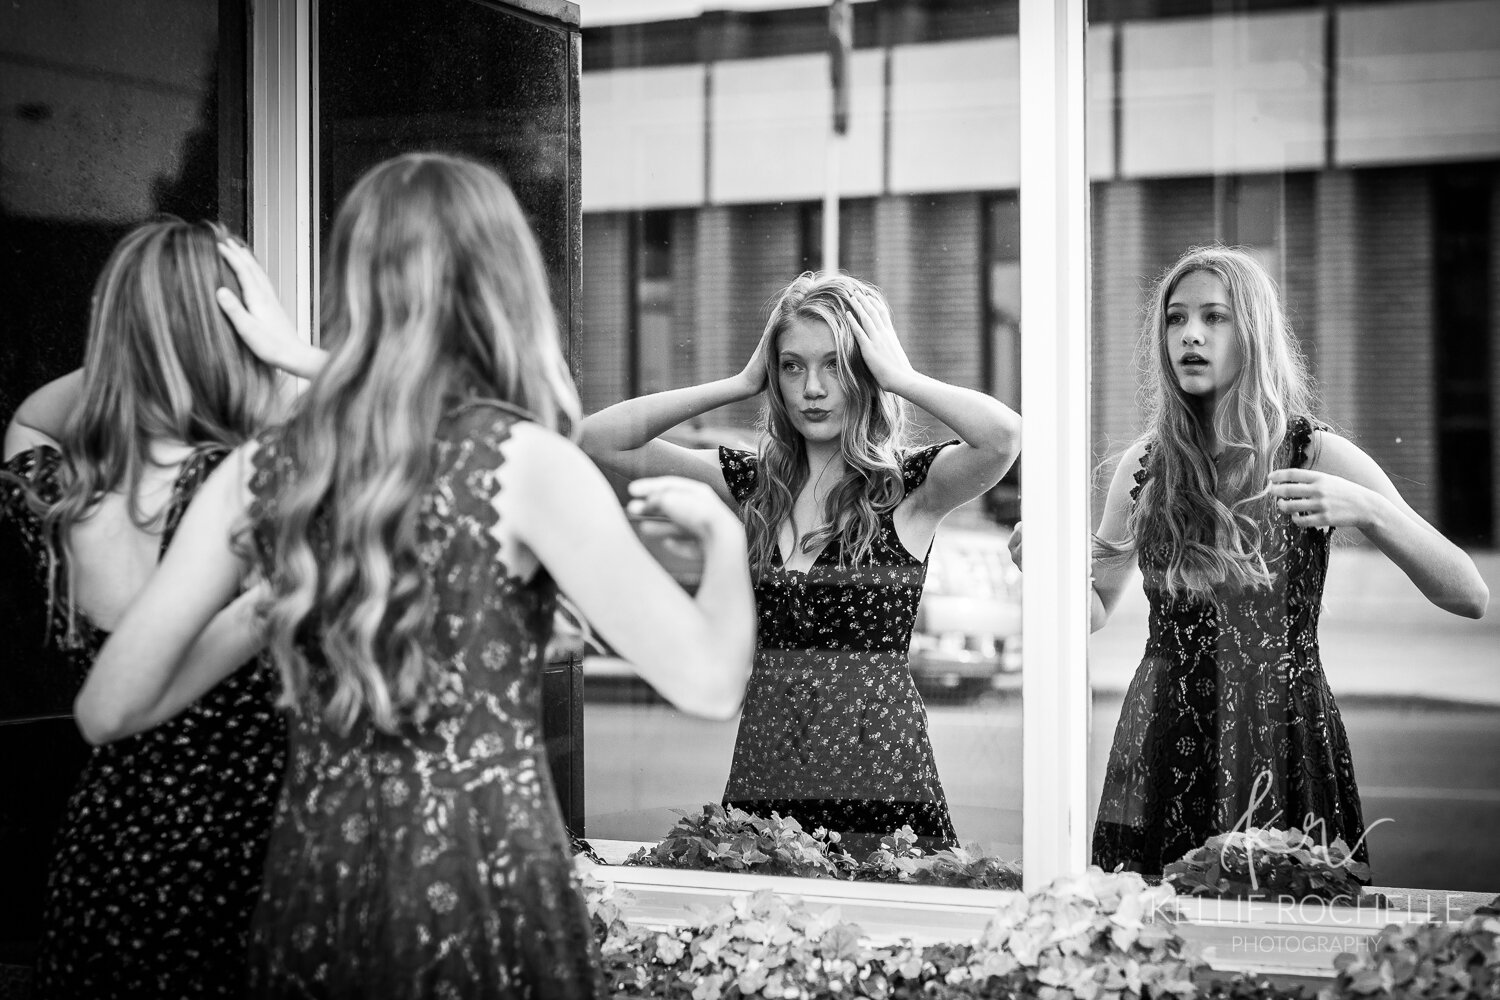 Girls looking at reflection